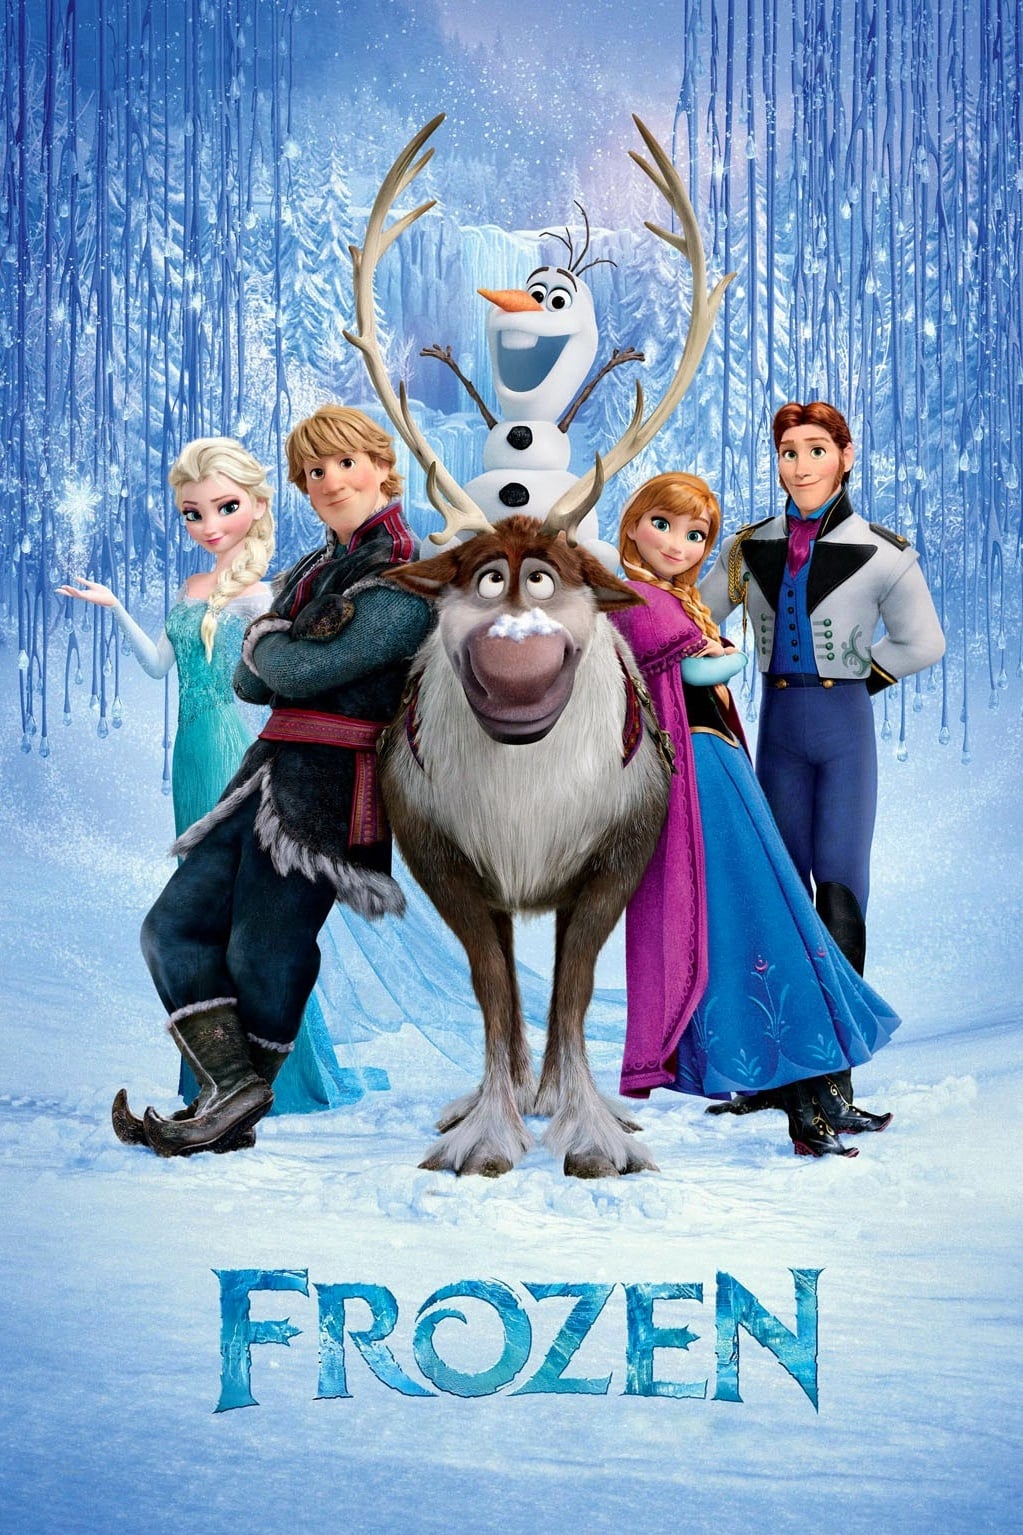  Frozen  1080p Full  Movie  Online on 123Movies